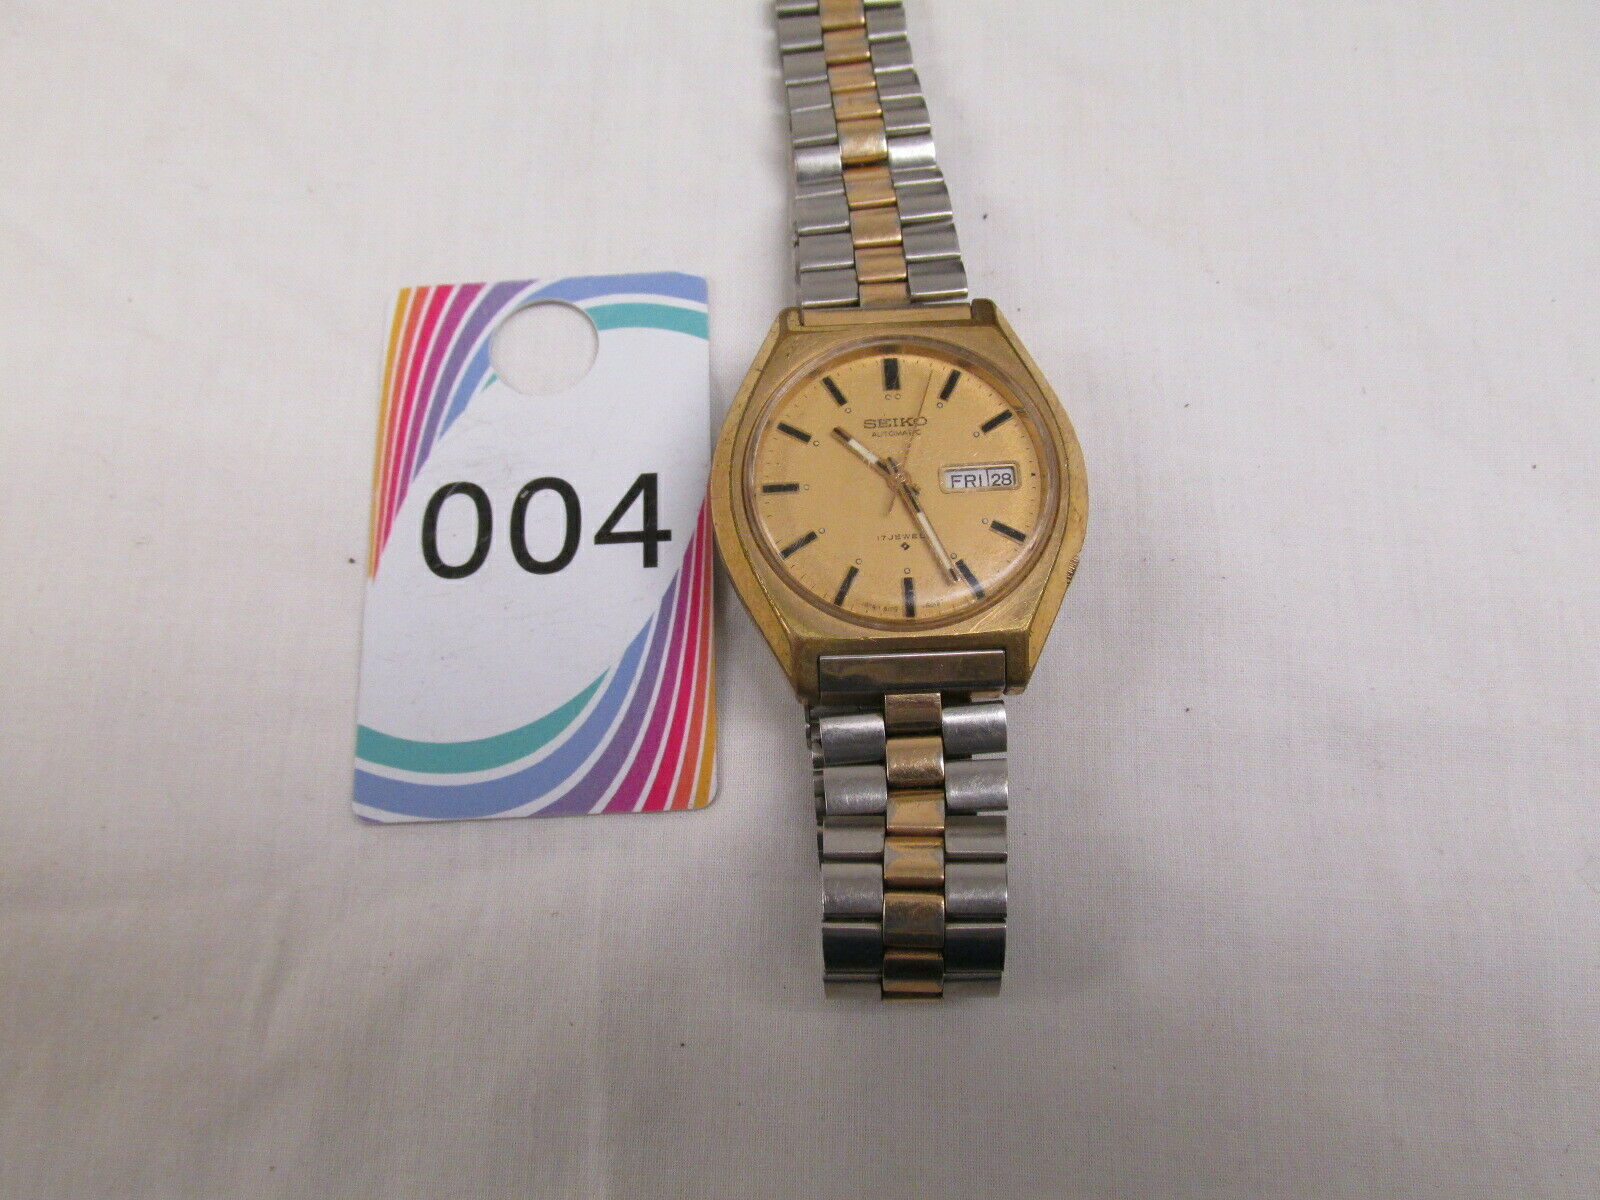 Vintage Seiko Automatic 17 Jewel Watch Textured Dial 6109-8019-T Japan #5 |  WatchCharts